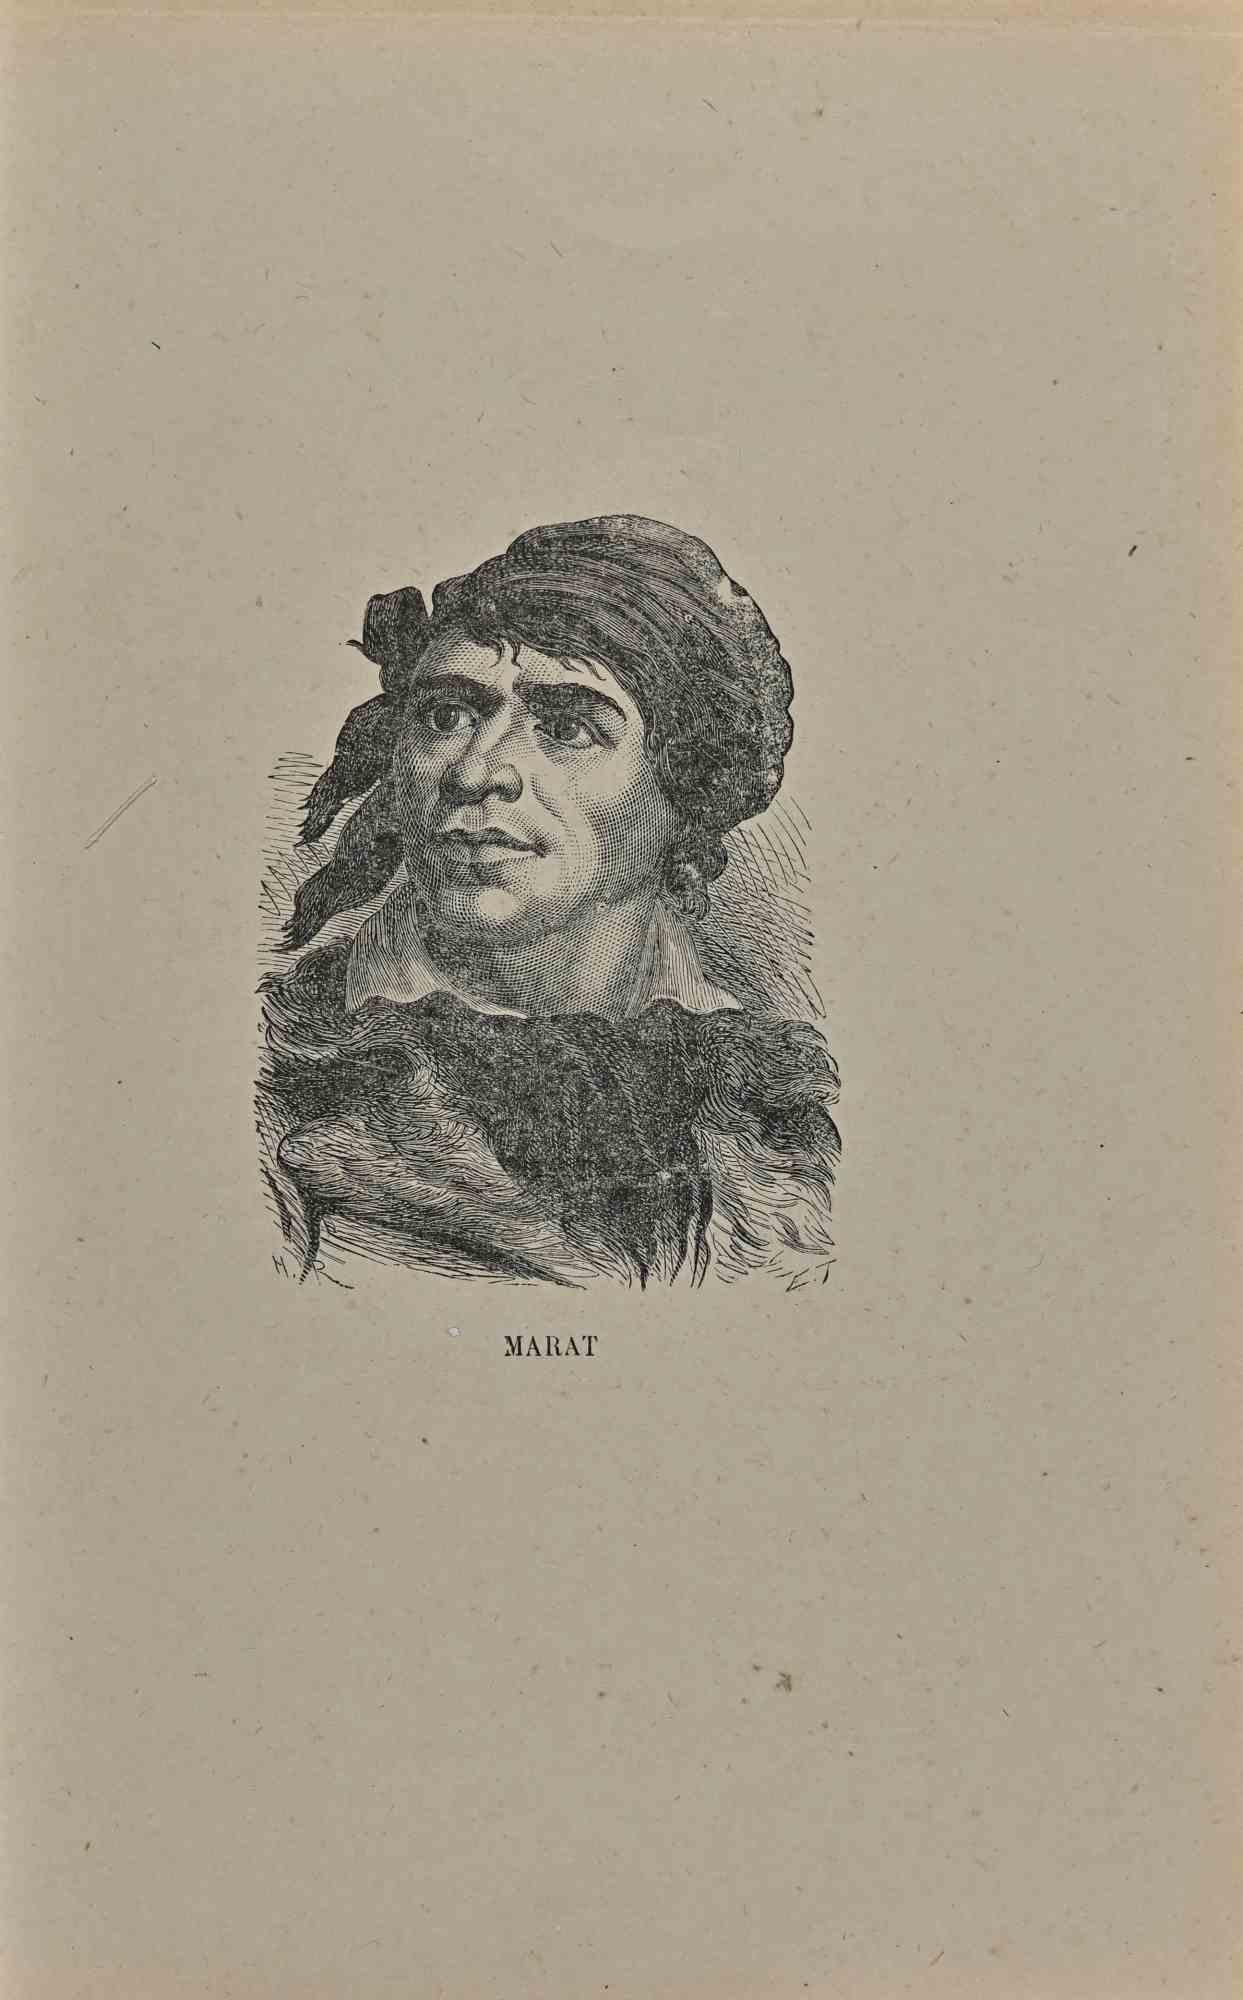 Unknown Portrait Print - Portrait of  Marat - Lithograph - Early 19th century